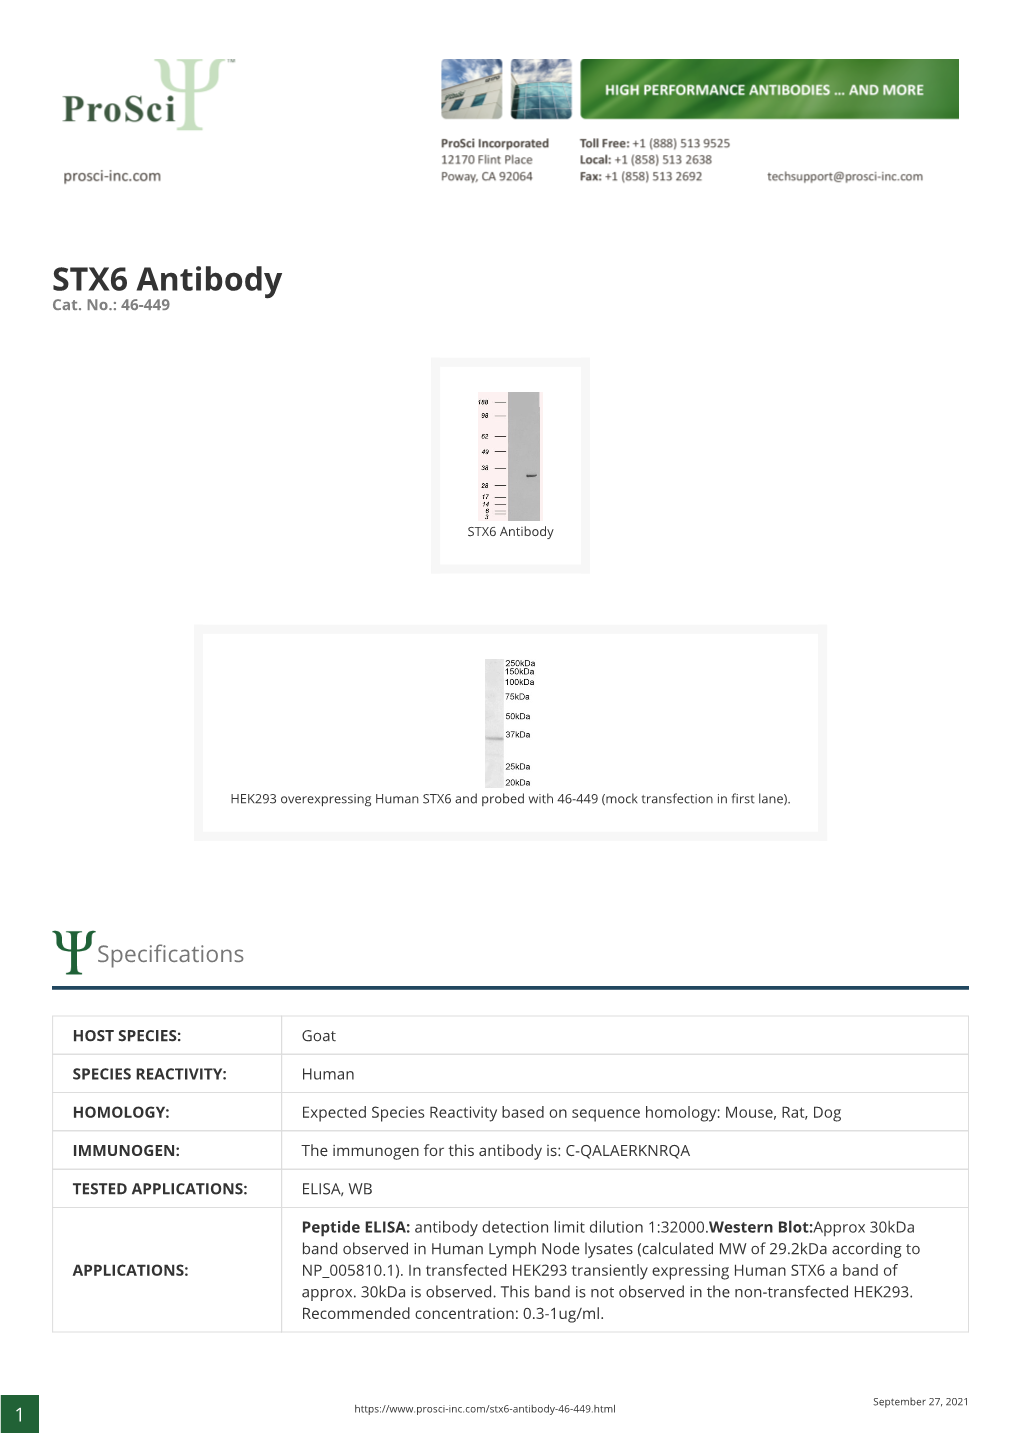 STX6 Antibody Cat